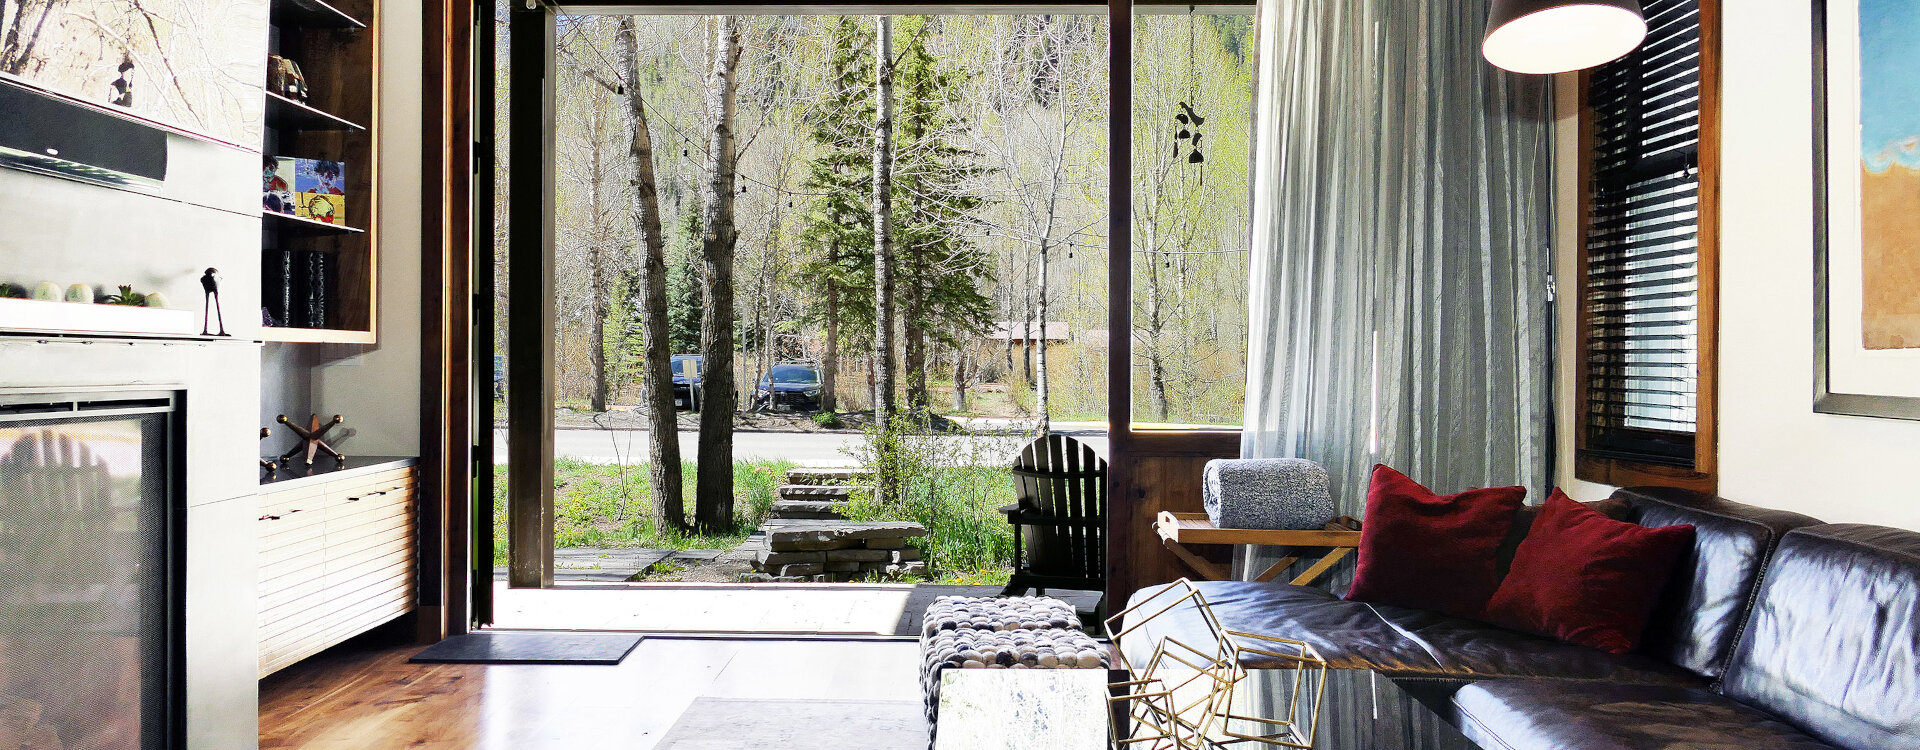 3.03-telluride-parkside-retreat-livingroom-deck